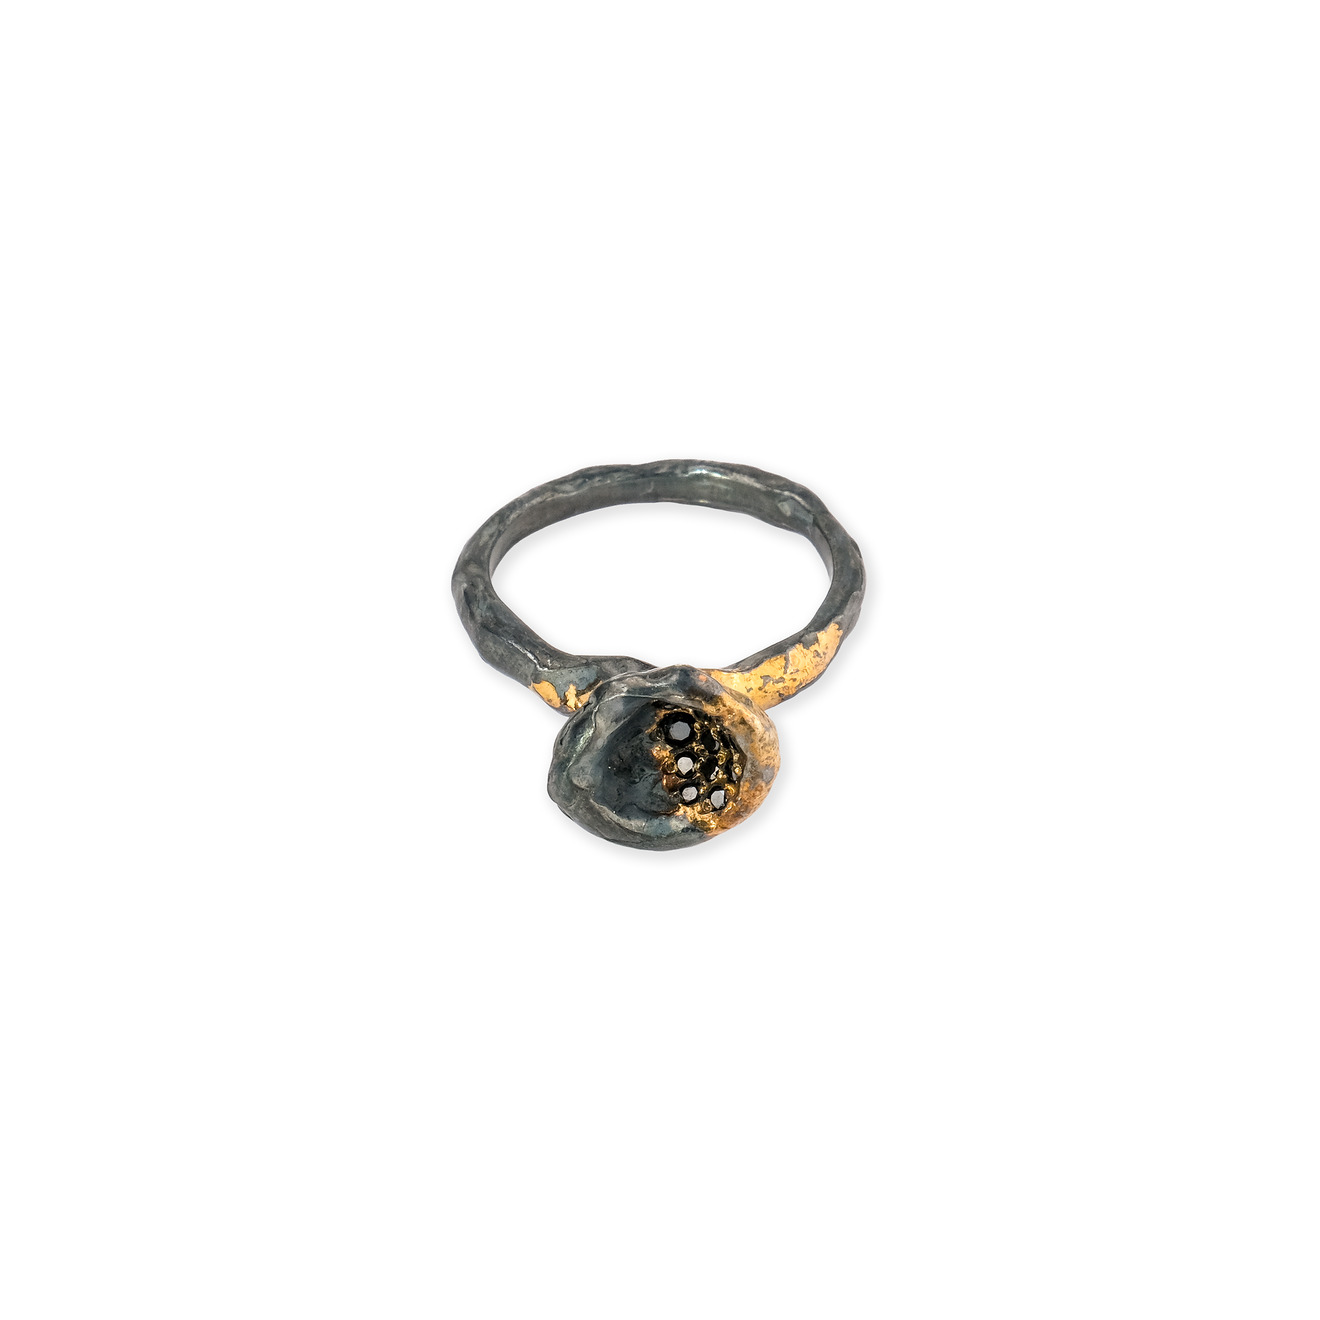 Kintsugi Jewelry Кольцо Soul2 из серебра с позолотой и бриллиантами кольцо с перидотами и фианитами из серебра с позолотой